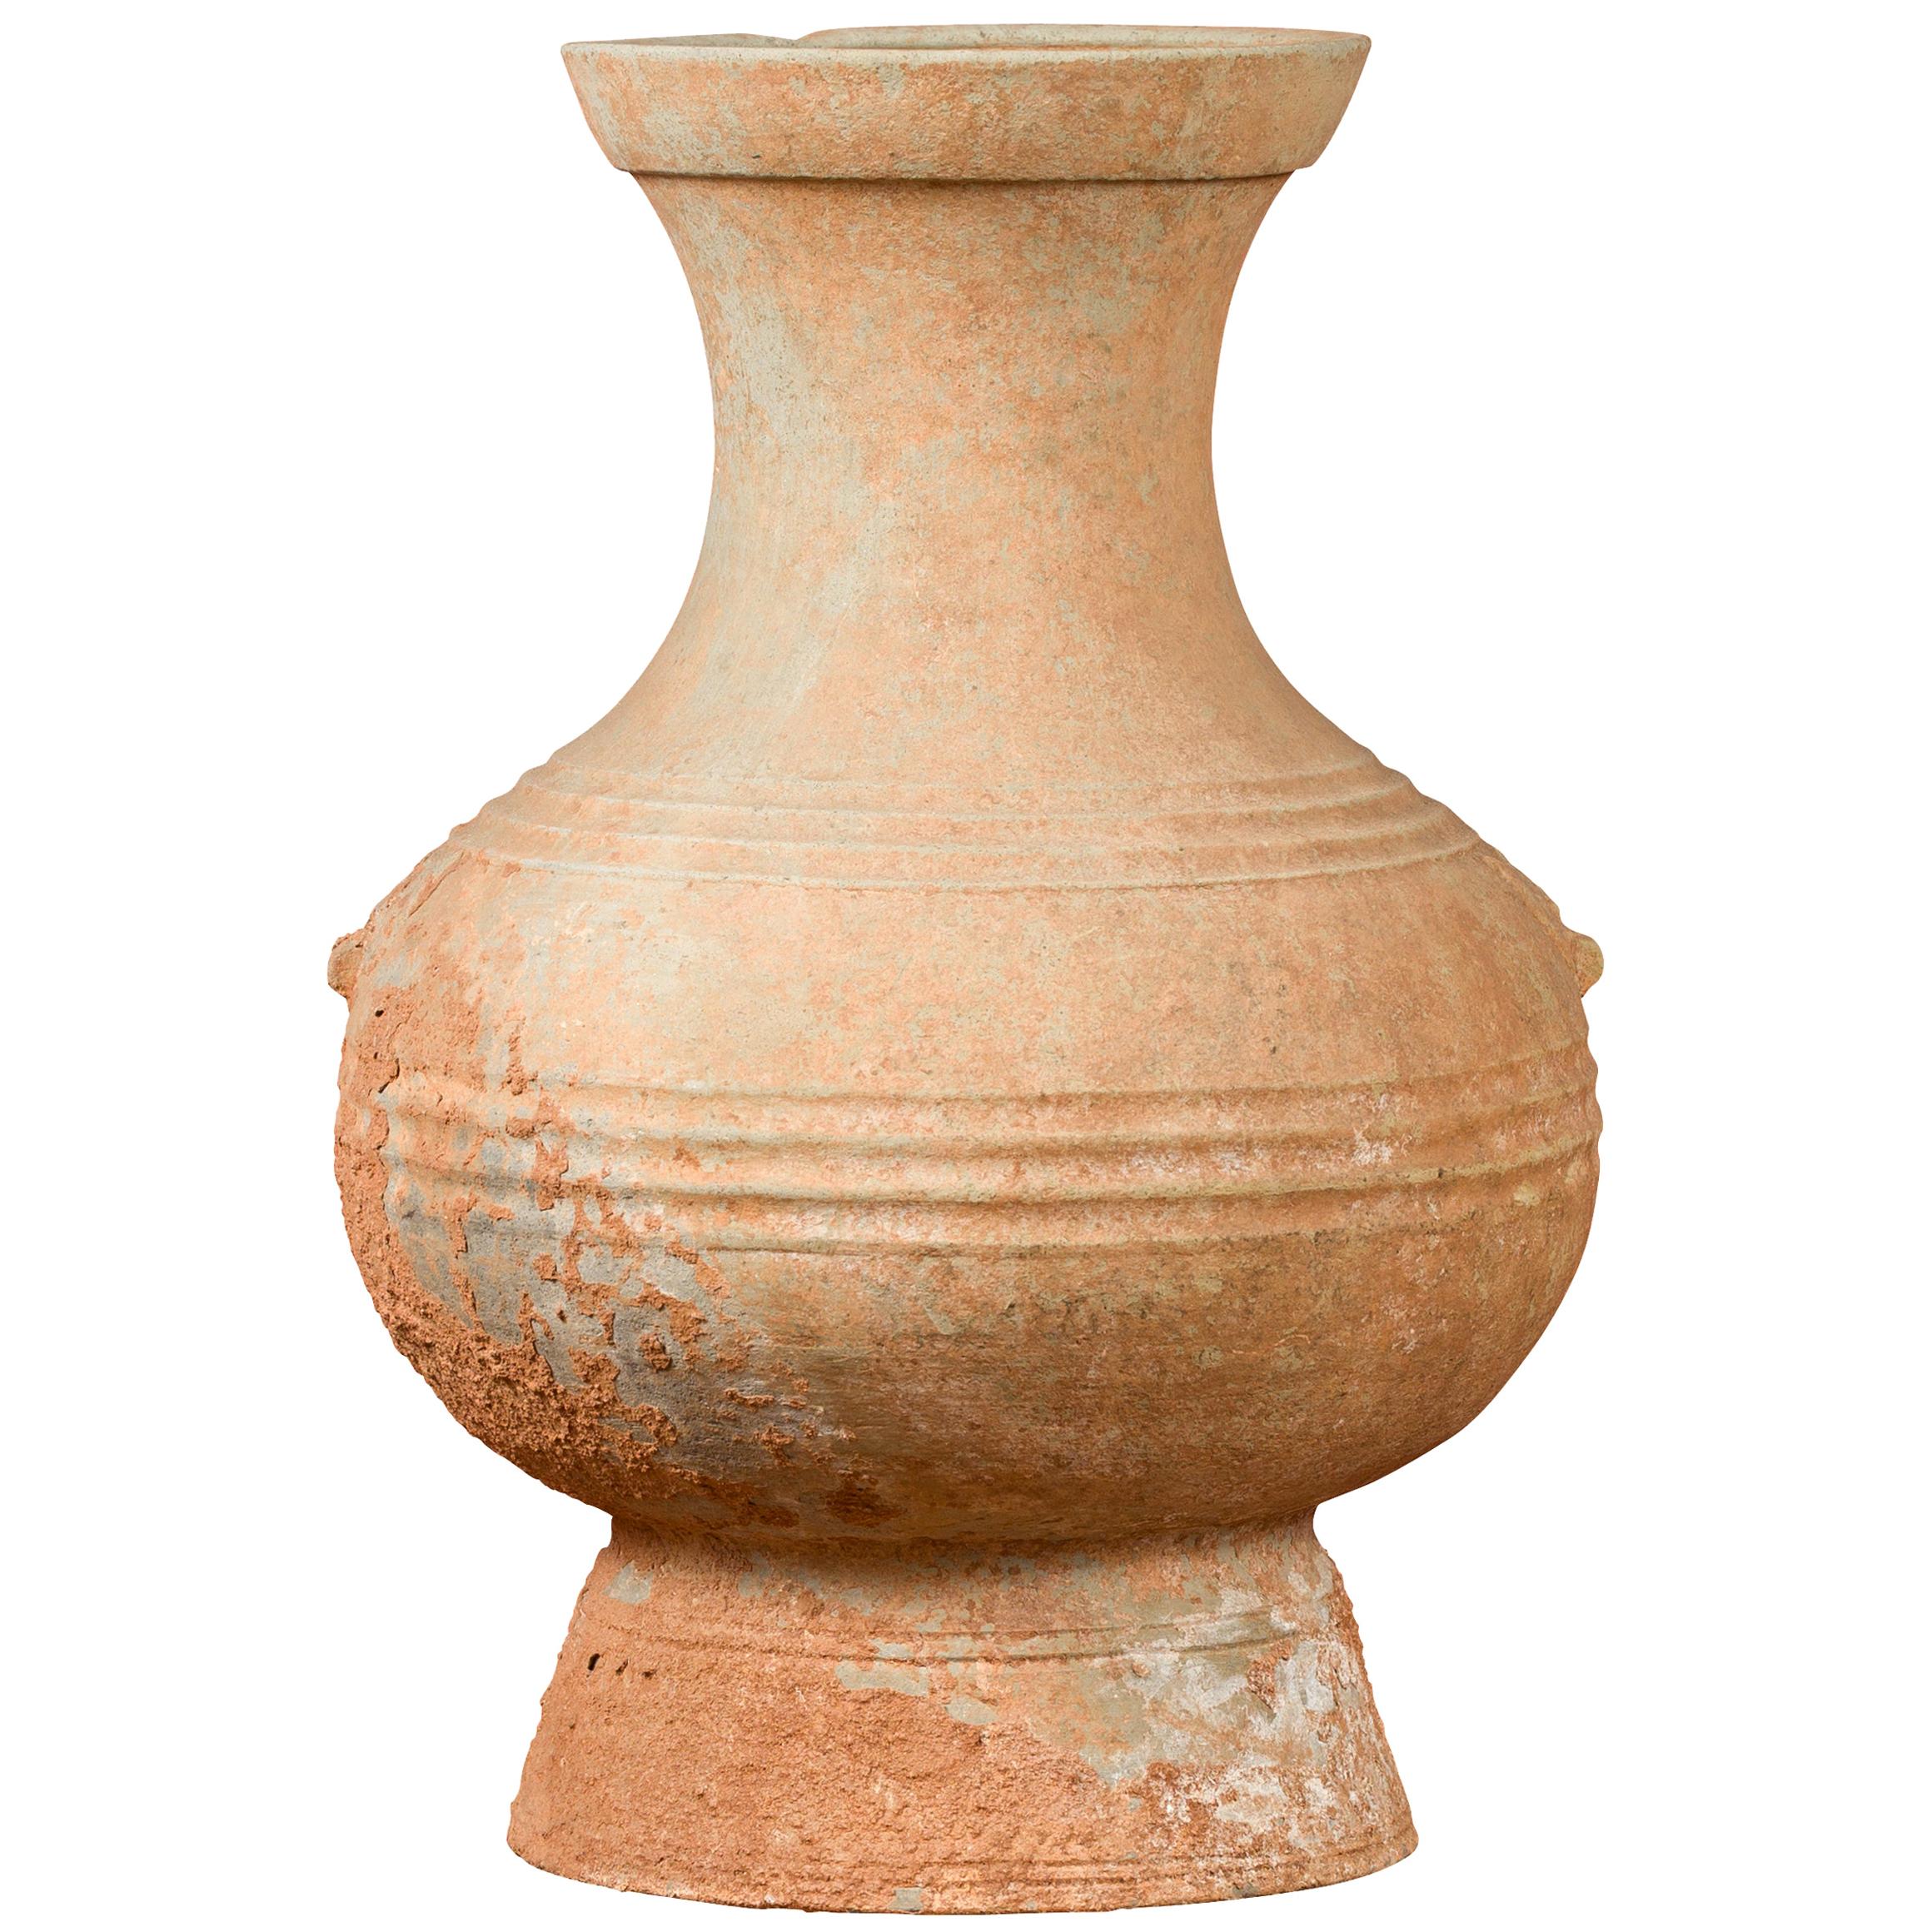 Chinese Han Dynasty Period Unglazed Terracotta Hu Vessel, circa 202 BC-200 AD